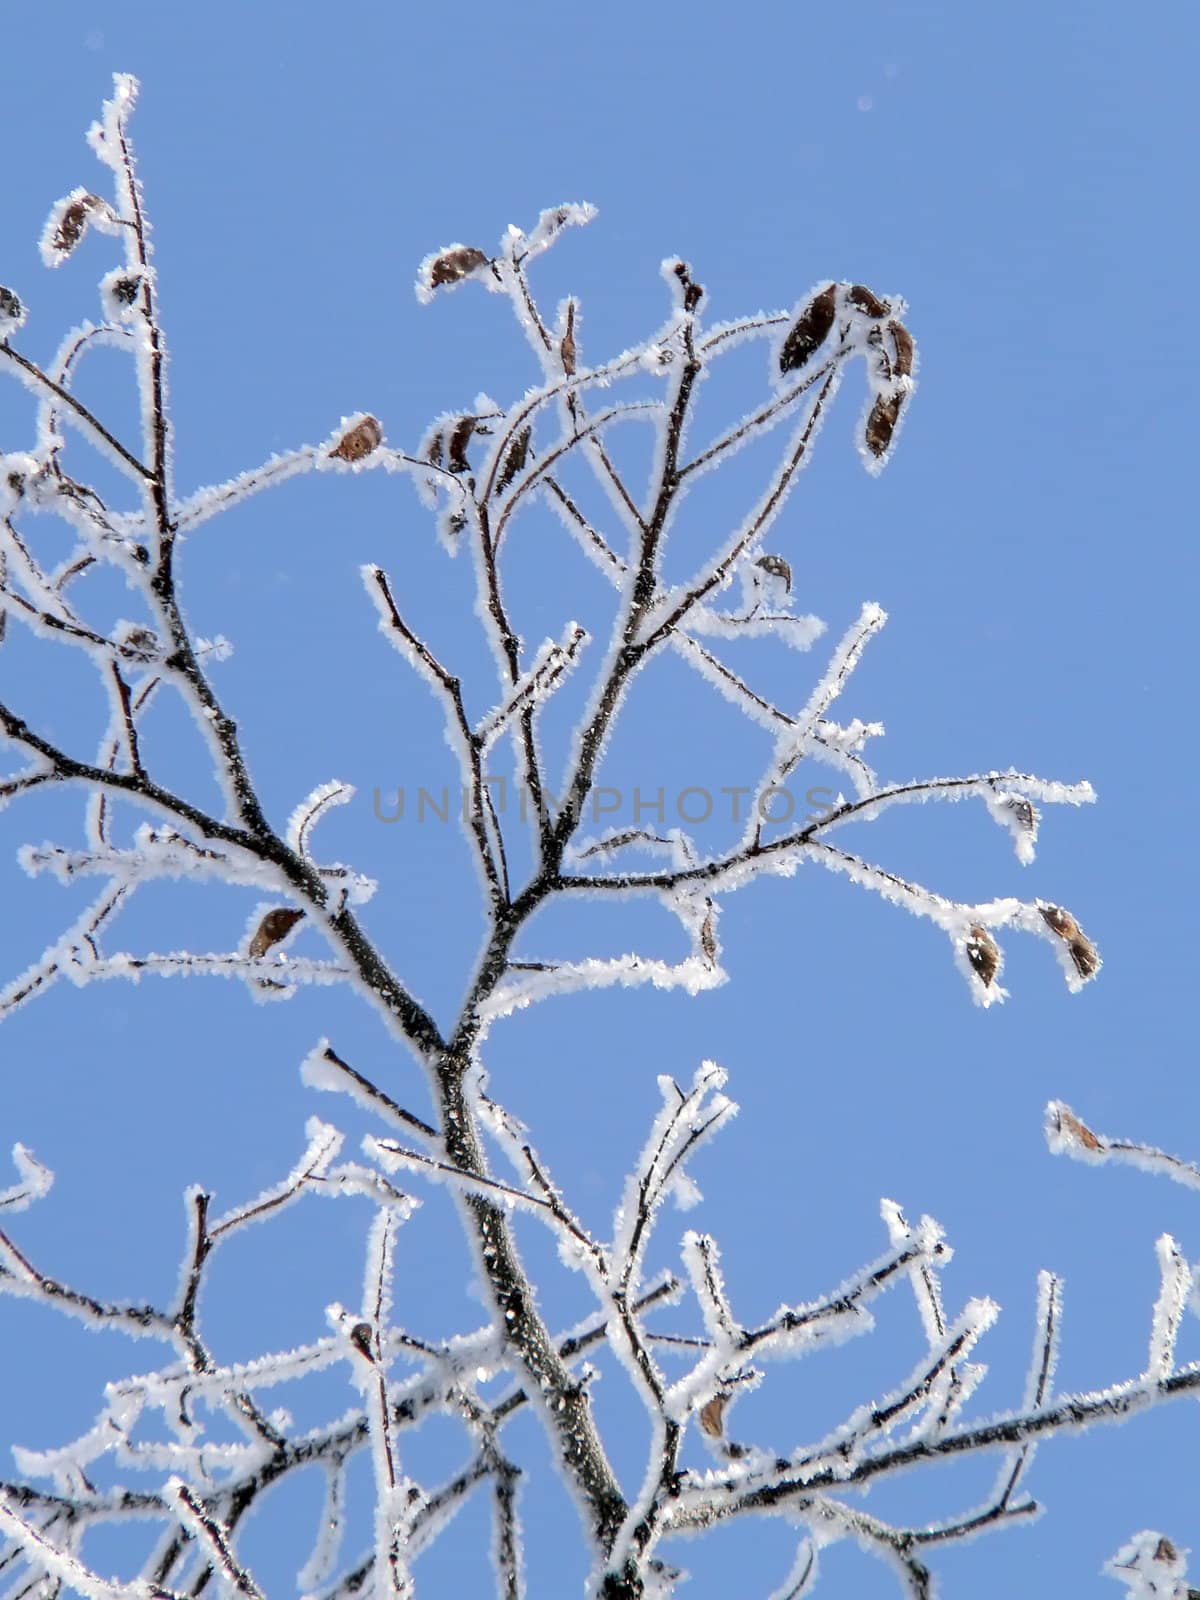 Hoar-frost on branch of tree. Clear blue sky background.